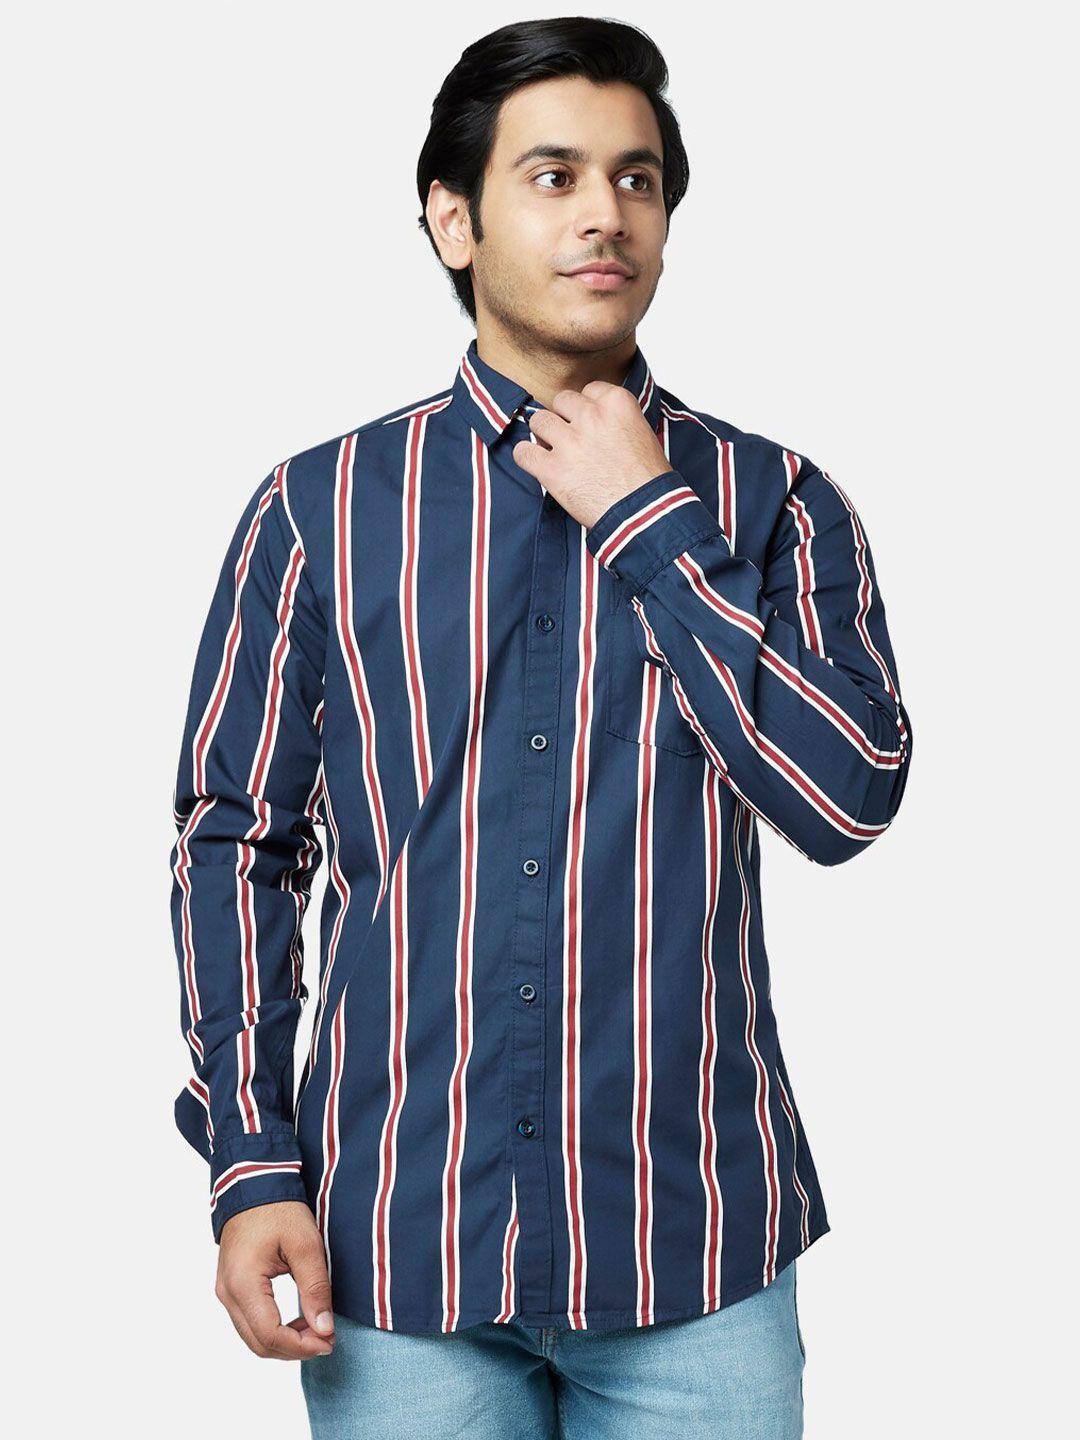 yu by pantaloons men navy blue slim fit striped cotton casual shirt